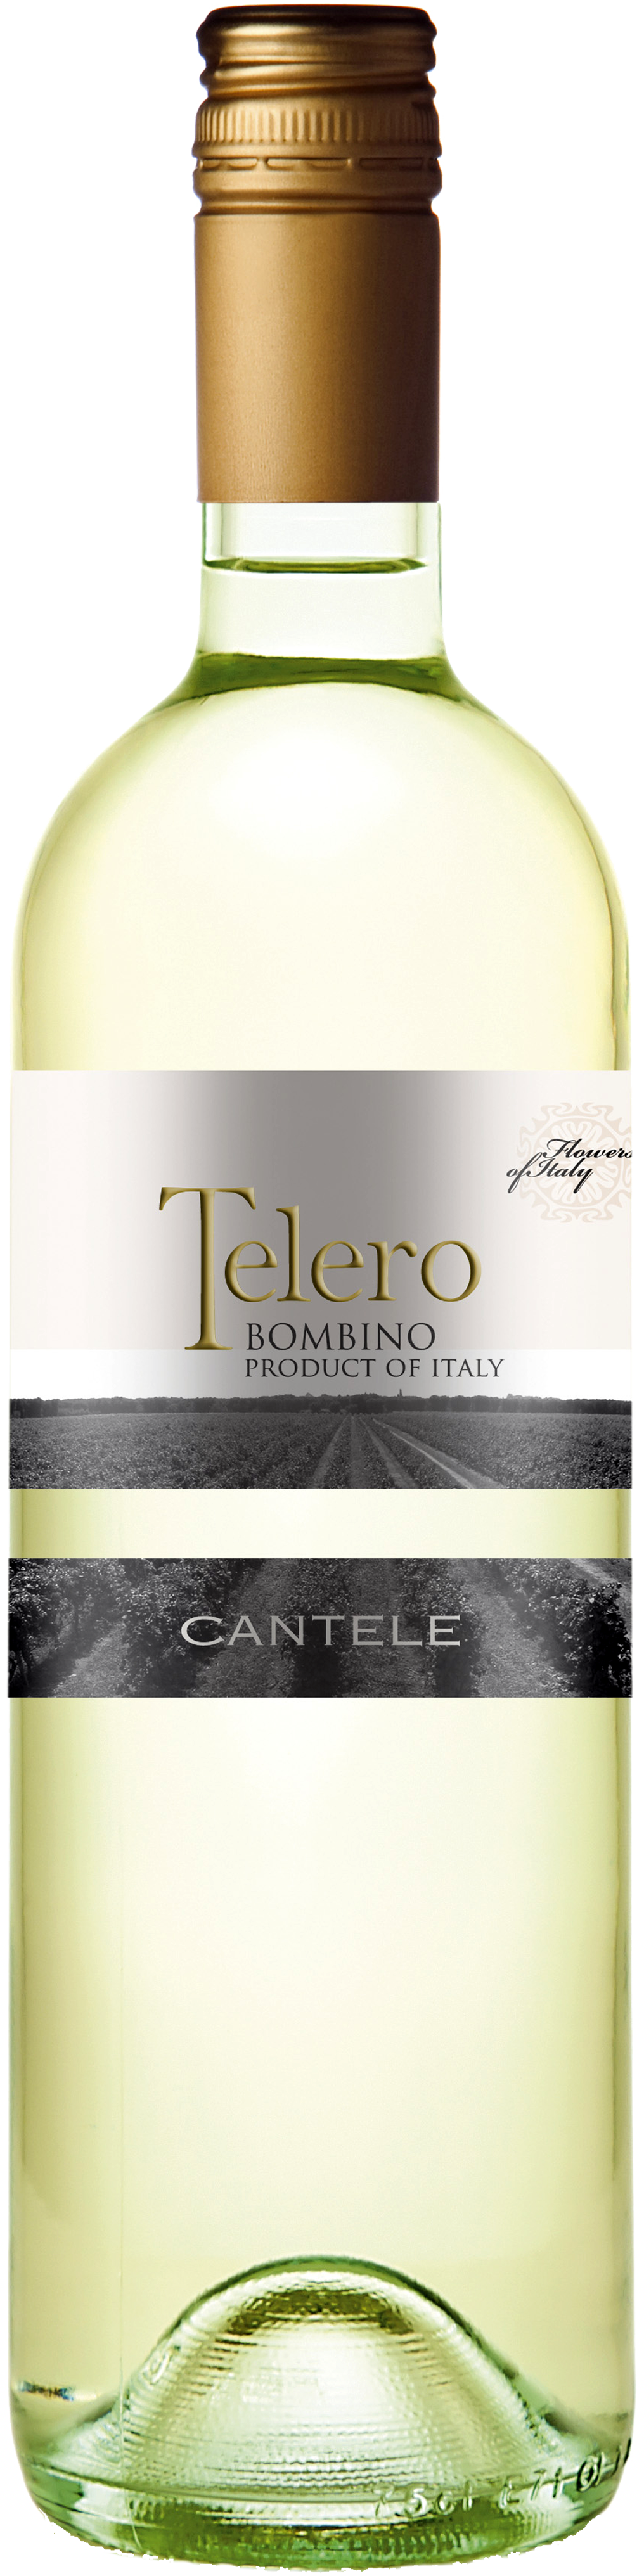 Bottle shot of 2013 Telero Bianco (Bombino)